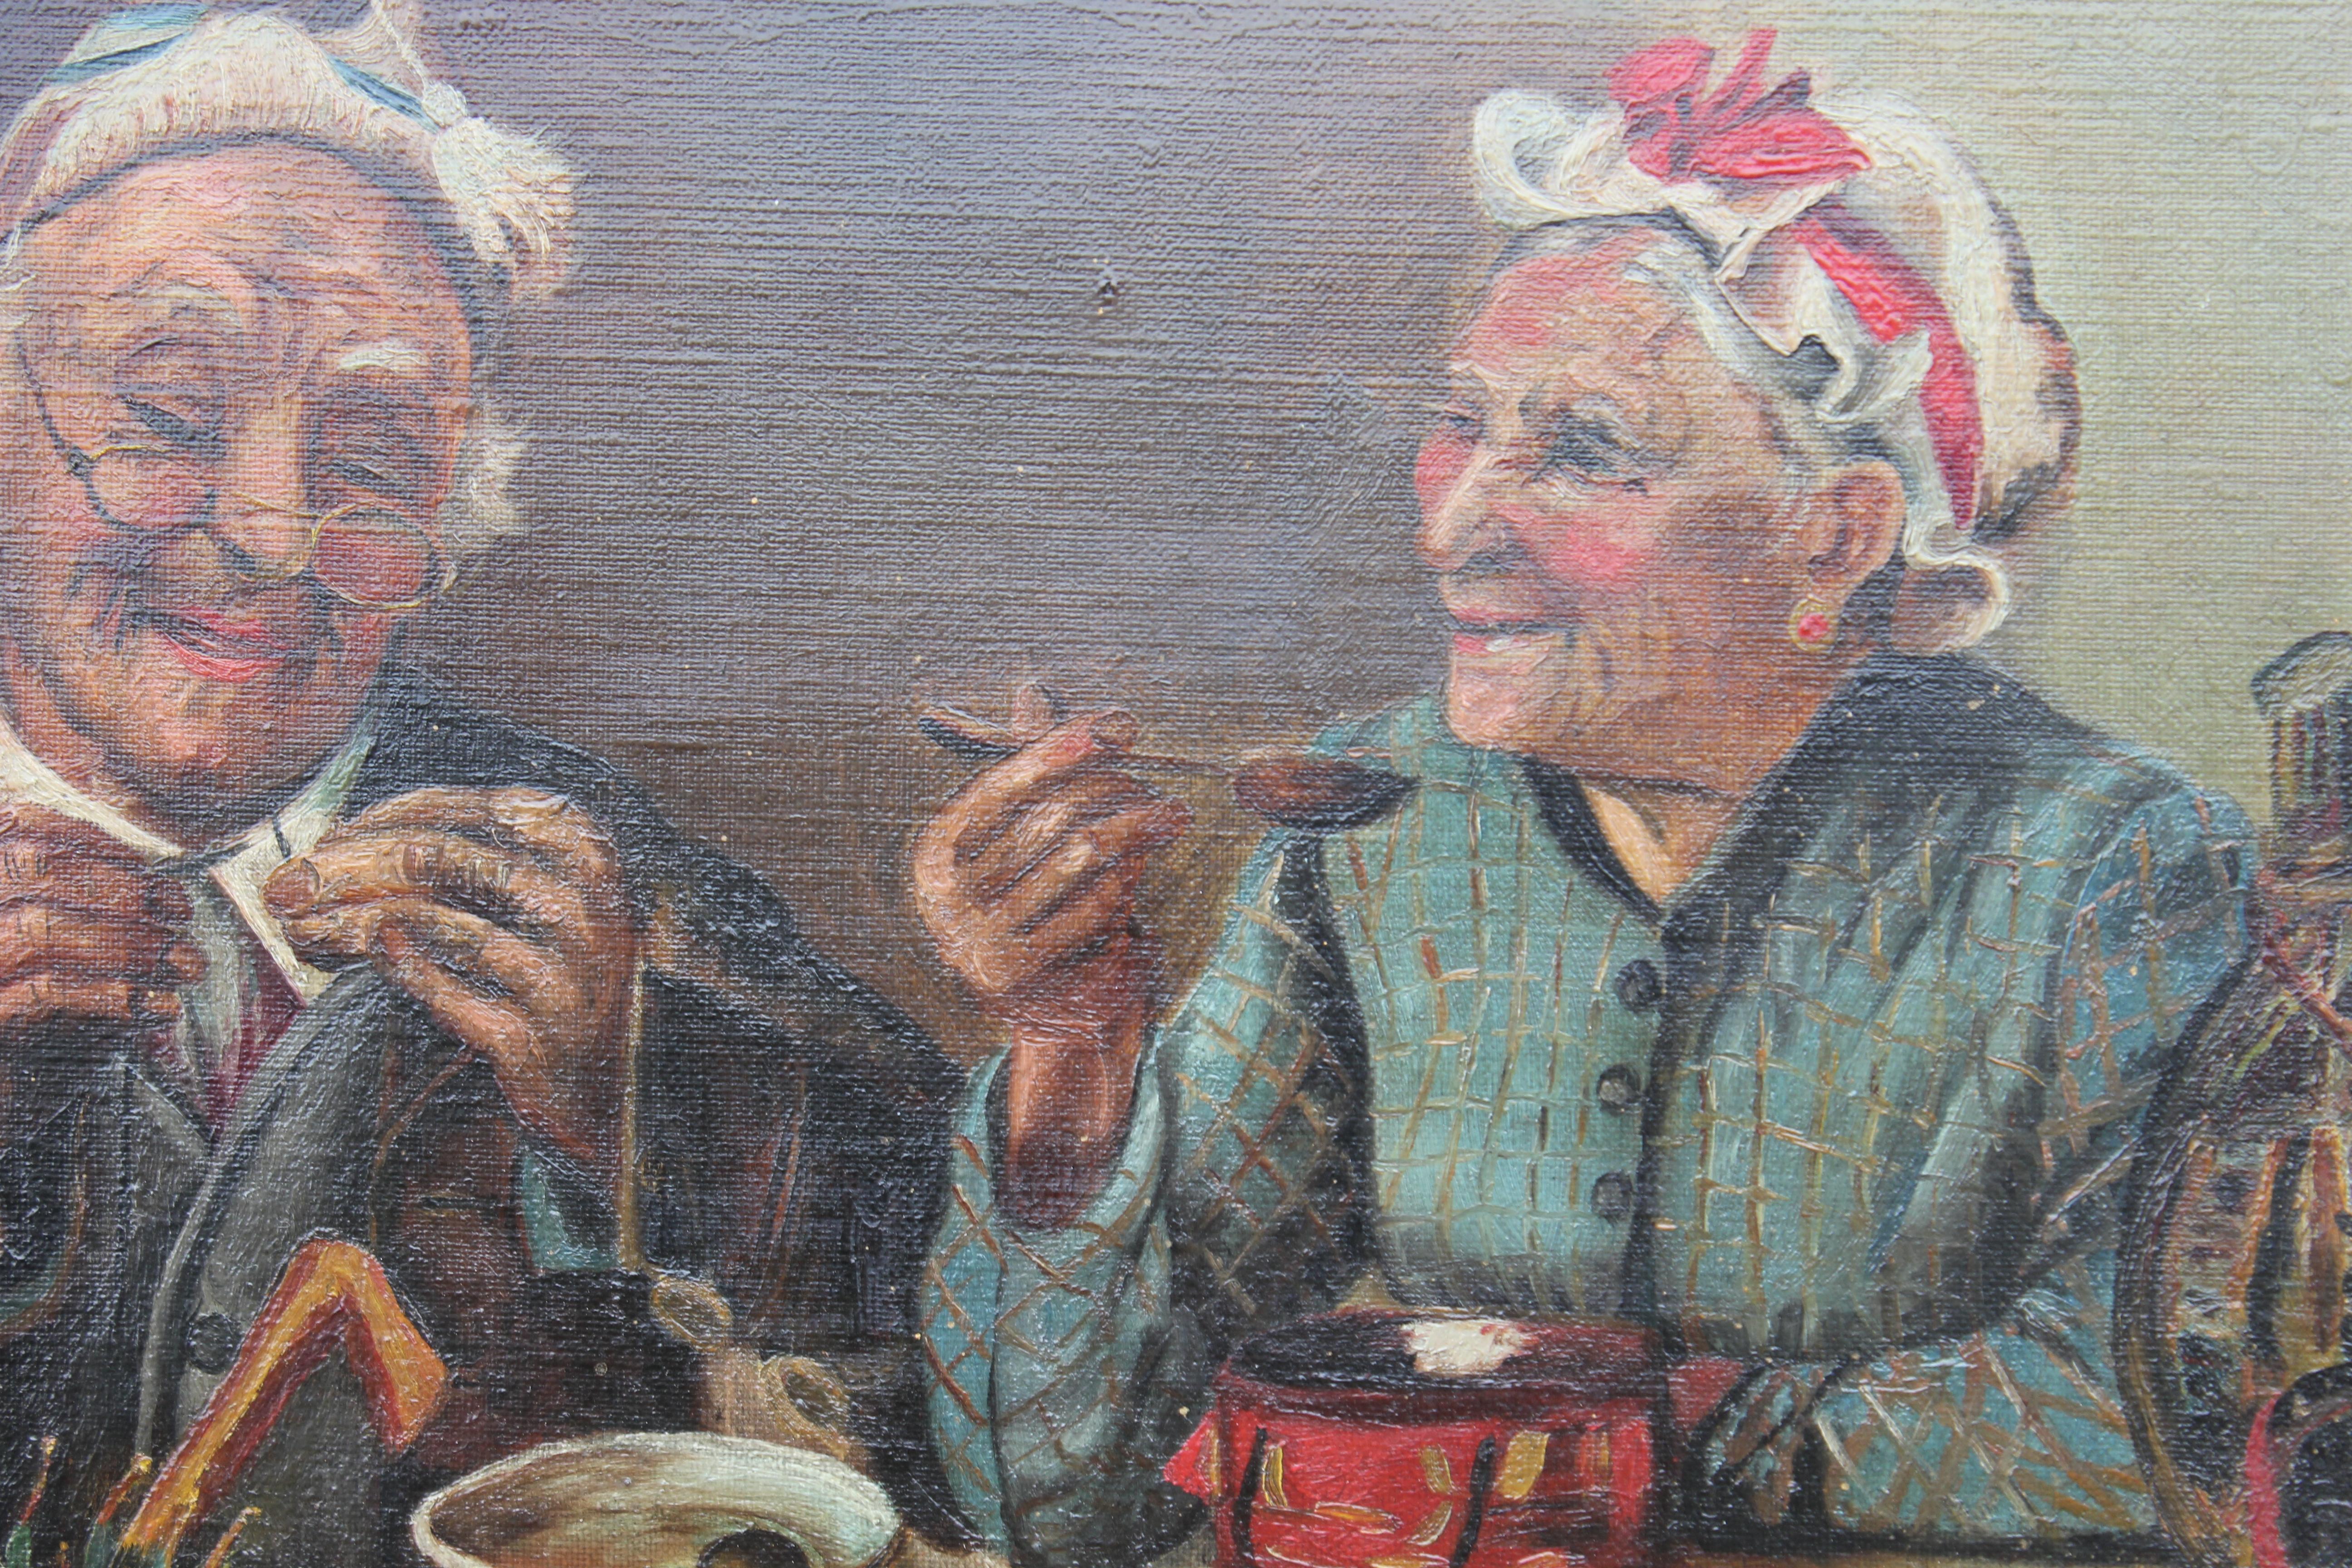 Dinning Elderly Couple - Painting by N. J. Garvin